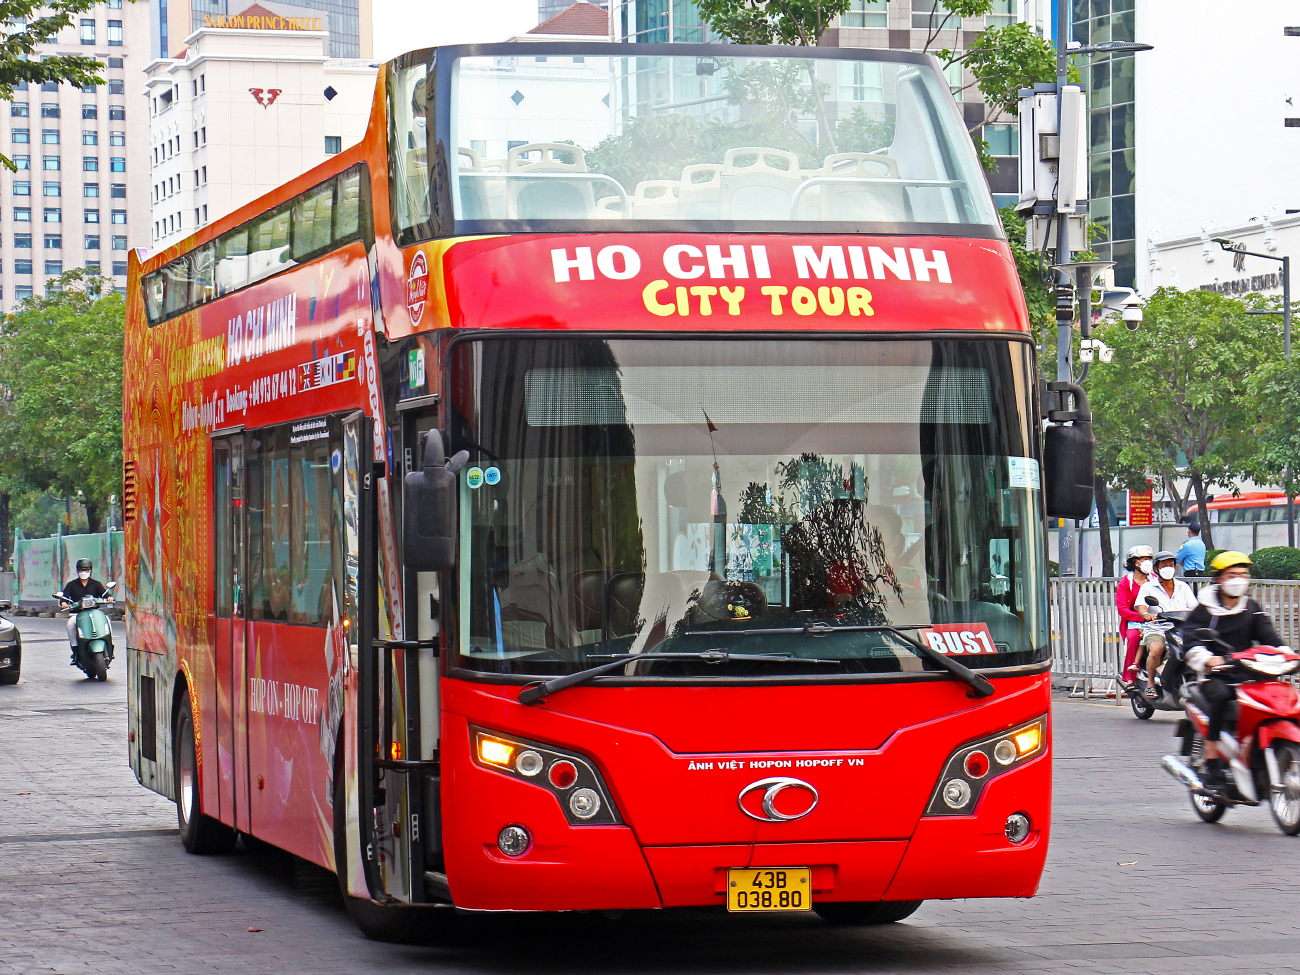 Ho Chi Minh City, Thaco TB120SS № 43B-038.80